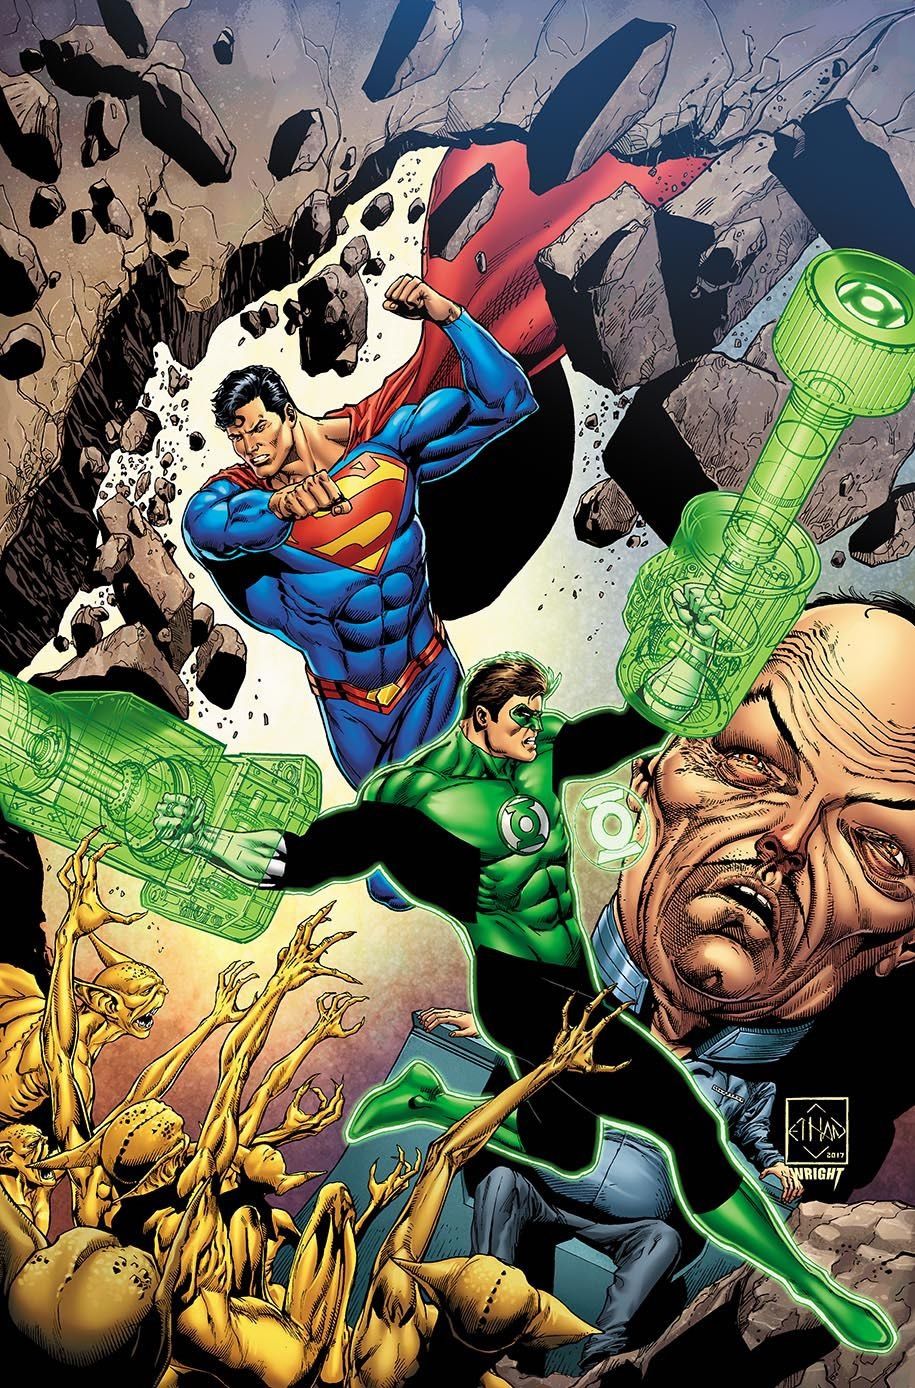 Hal Jordan and the Green Lantern Corps Vol 1 31